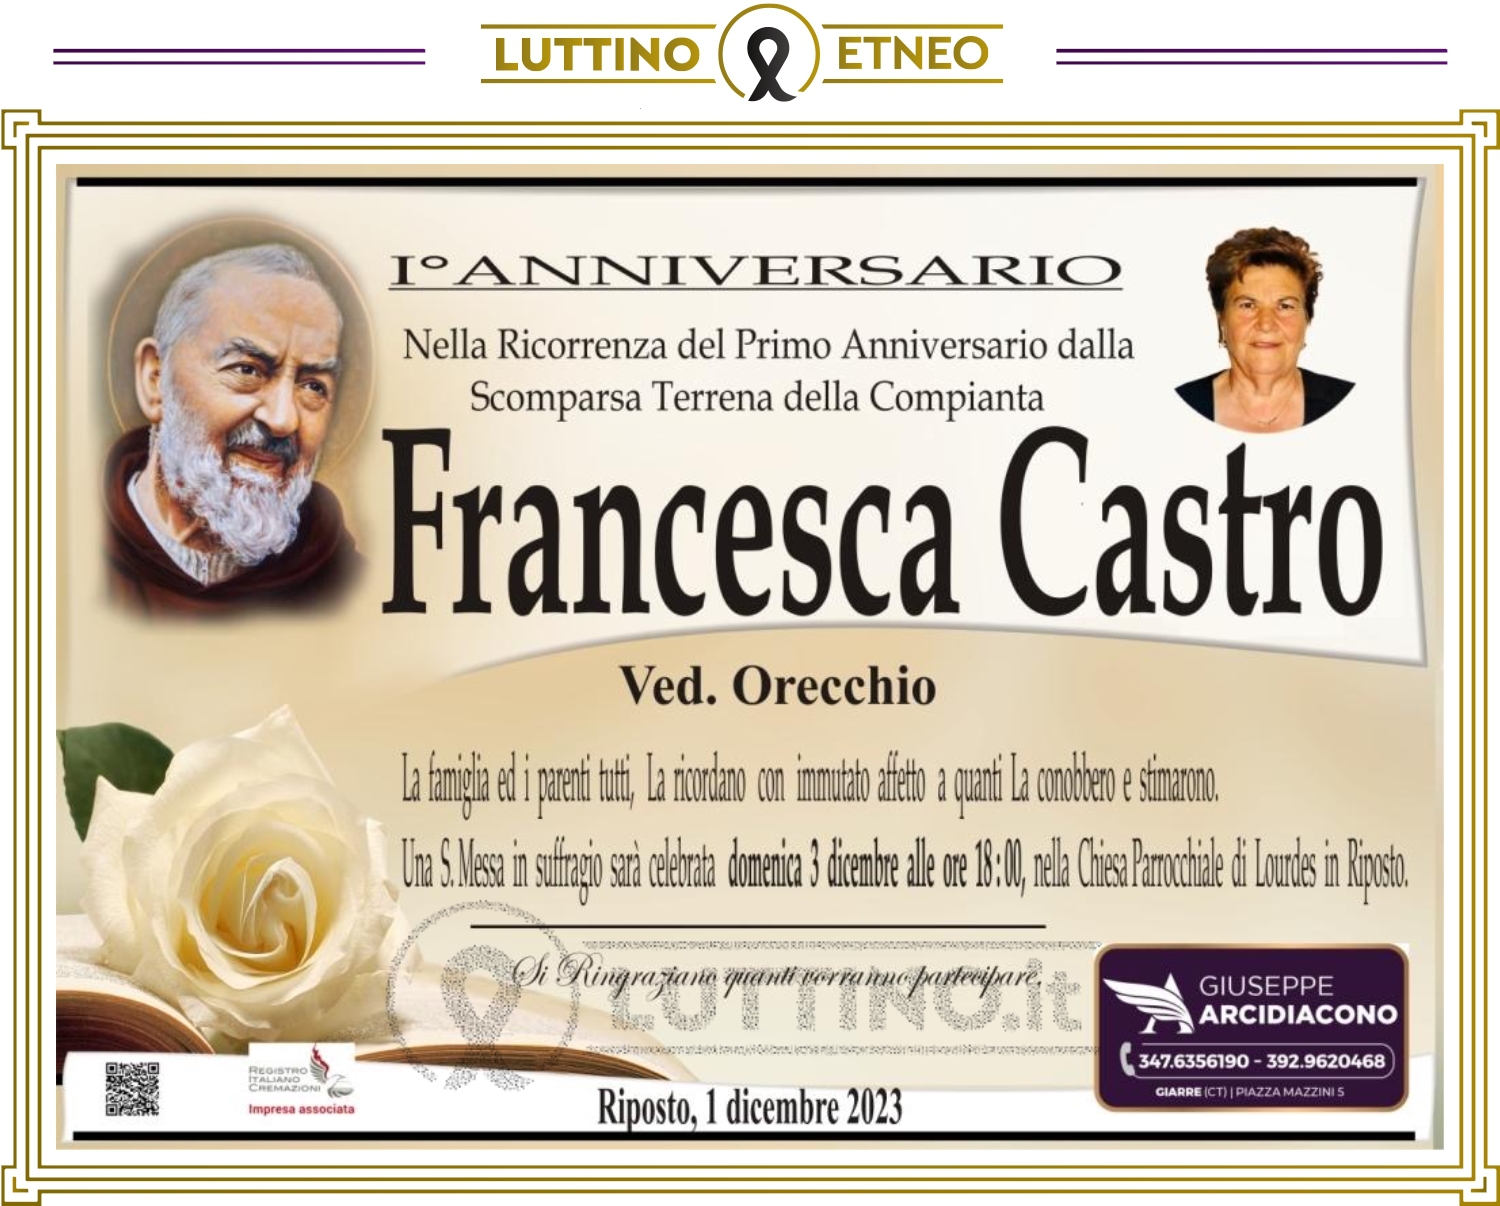 Francesca Castro